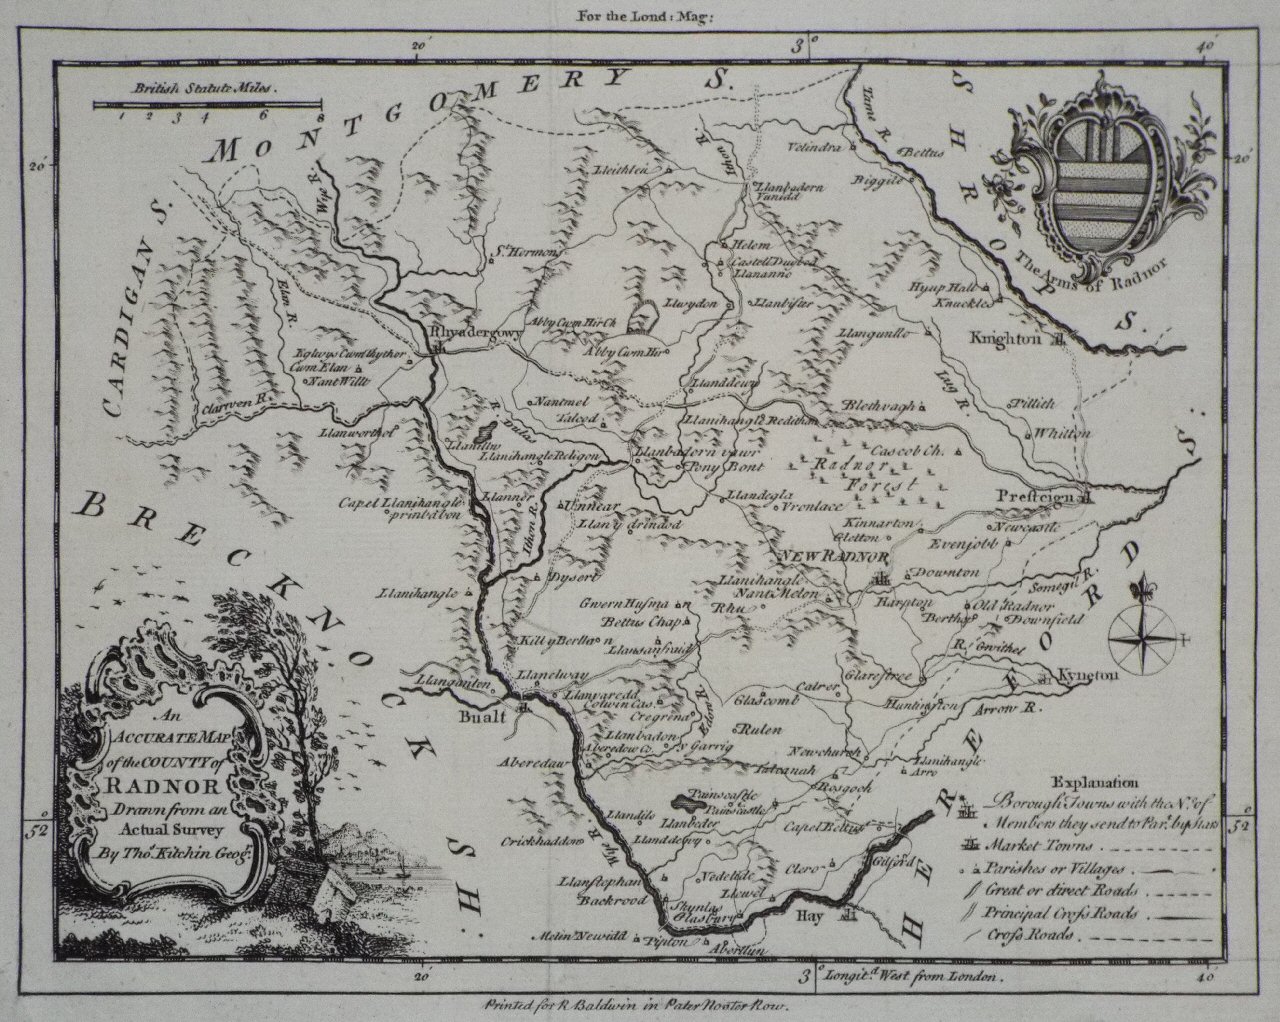 Map of Radnorshire - Kitchin